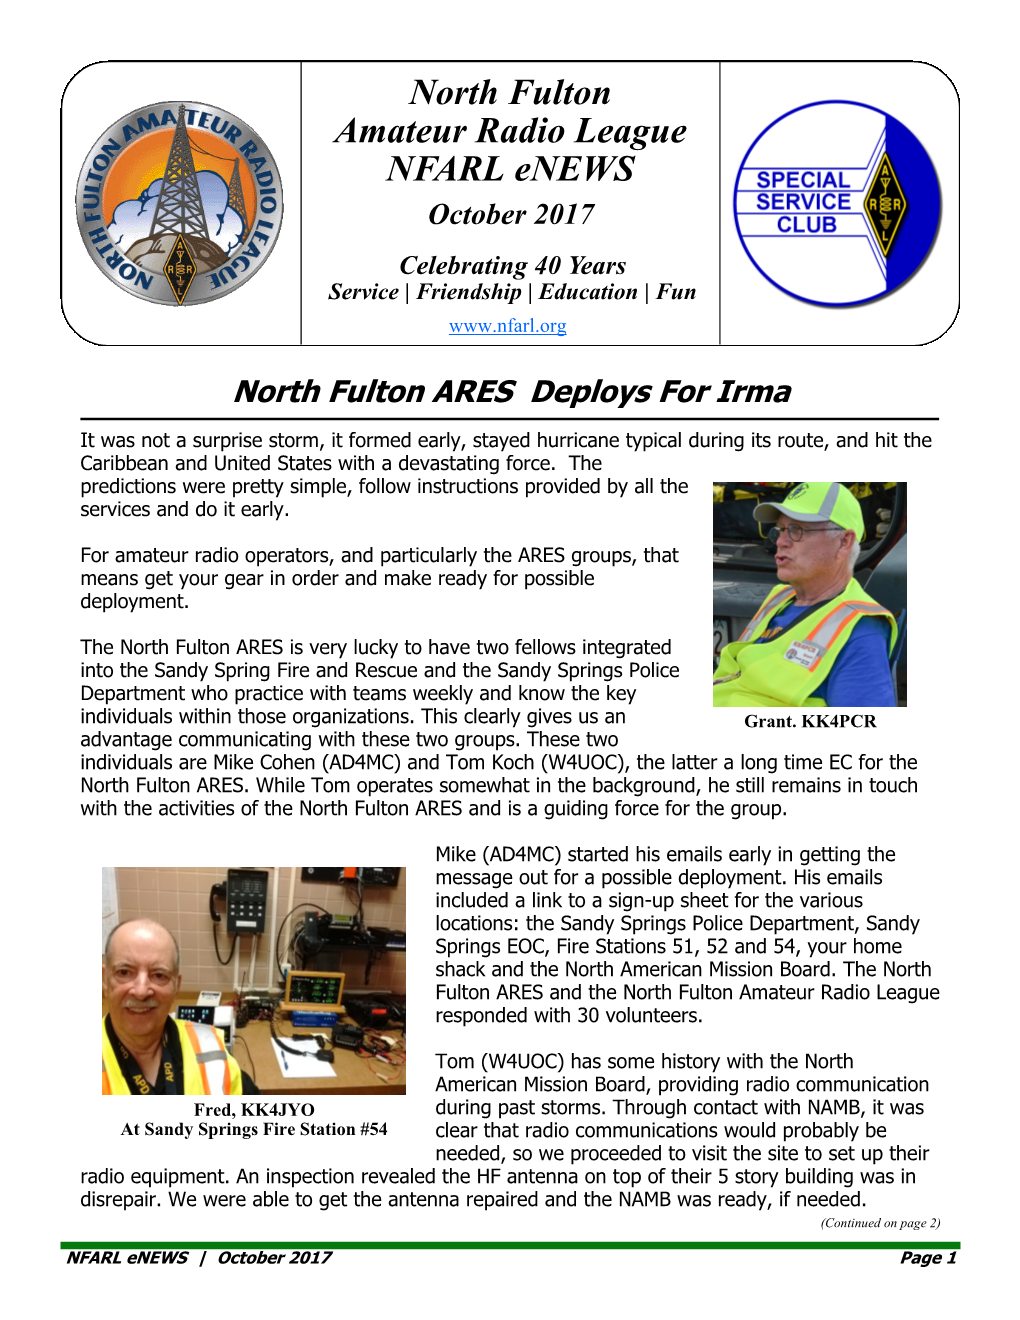 North Fulton Amateur Radio League NFARL Enews